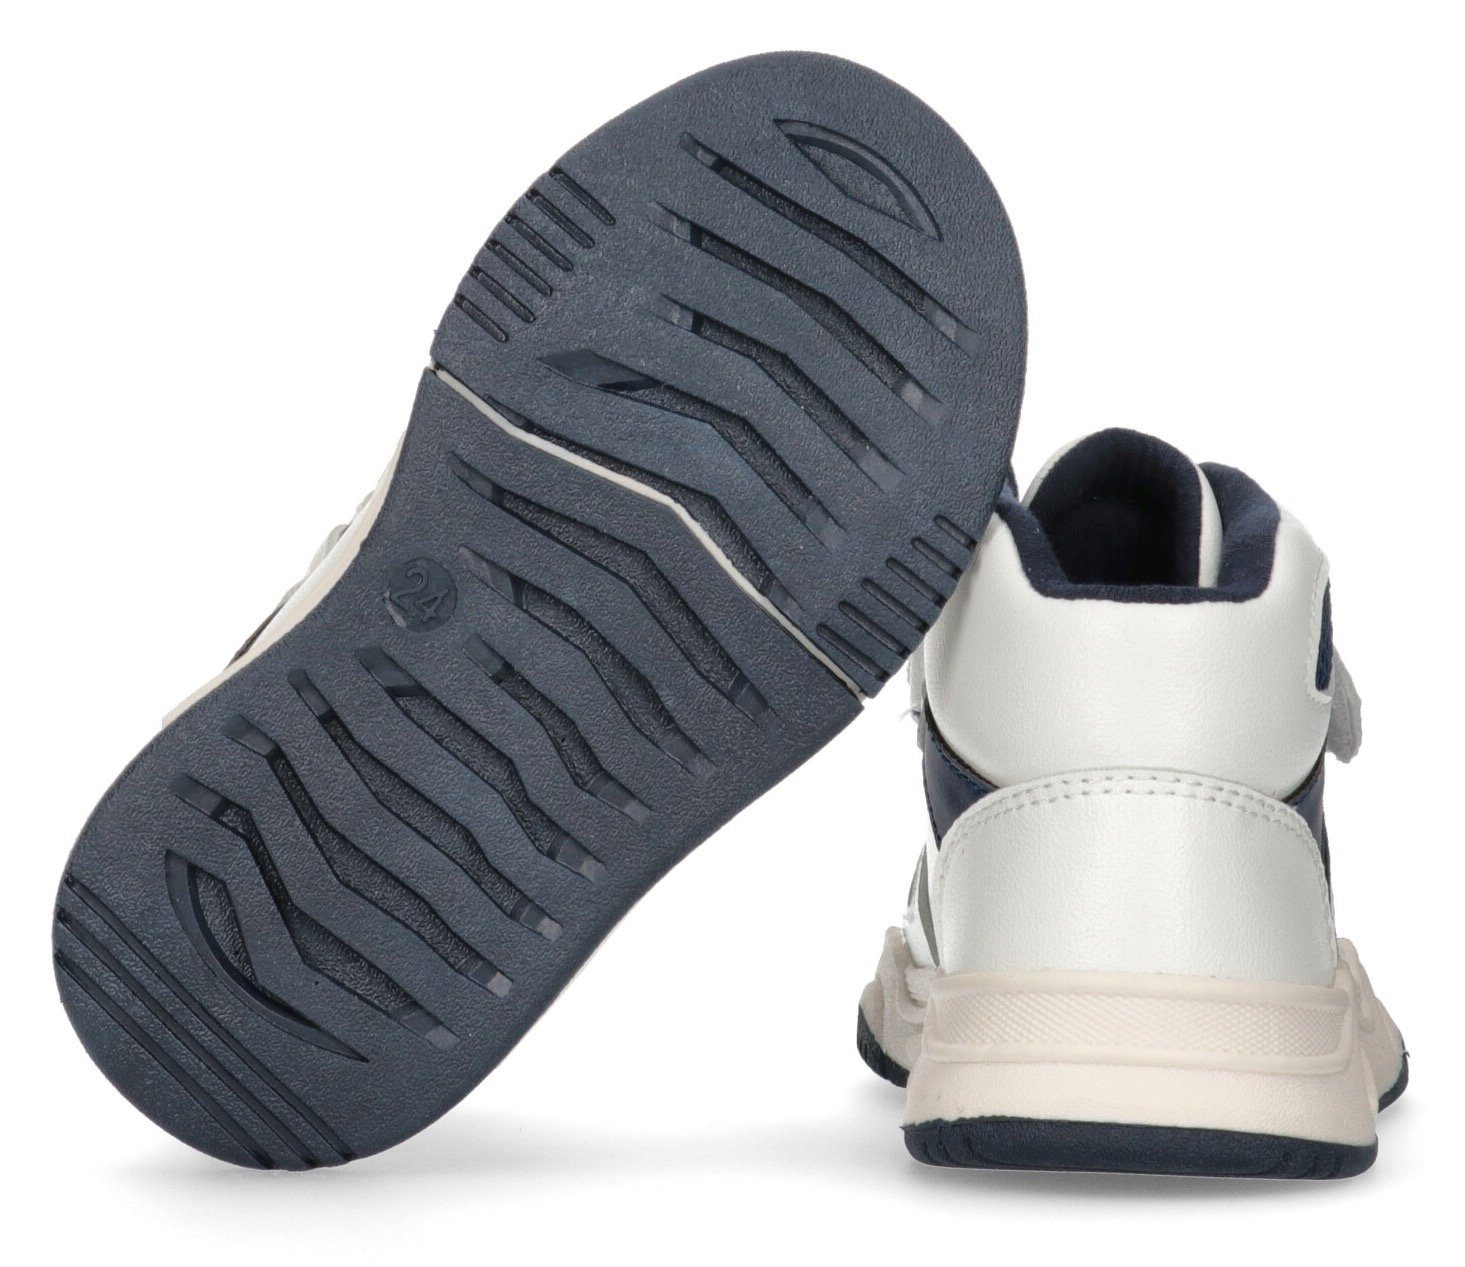 Sneaker cooler SNEAKER HIGH Tommy Farbkombi LACE-UP/VELCRO Hilfiger TOP in STRIPES